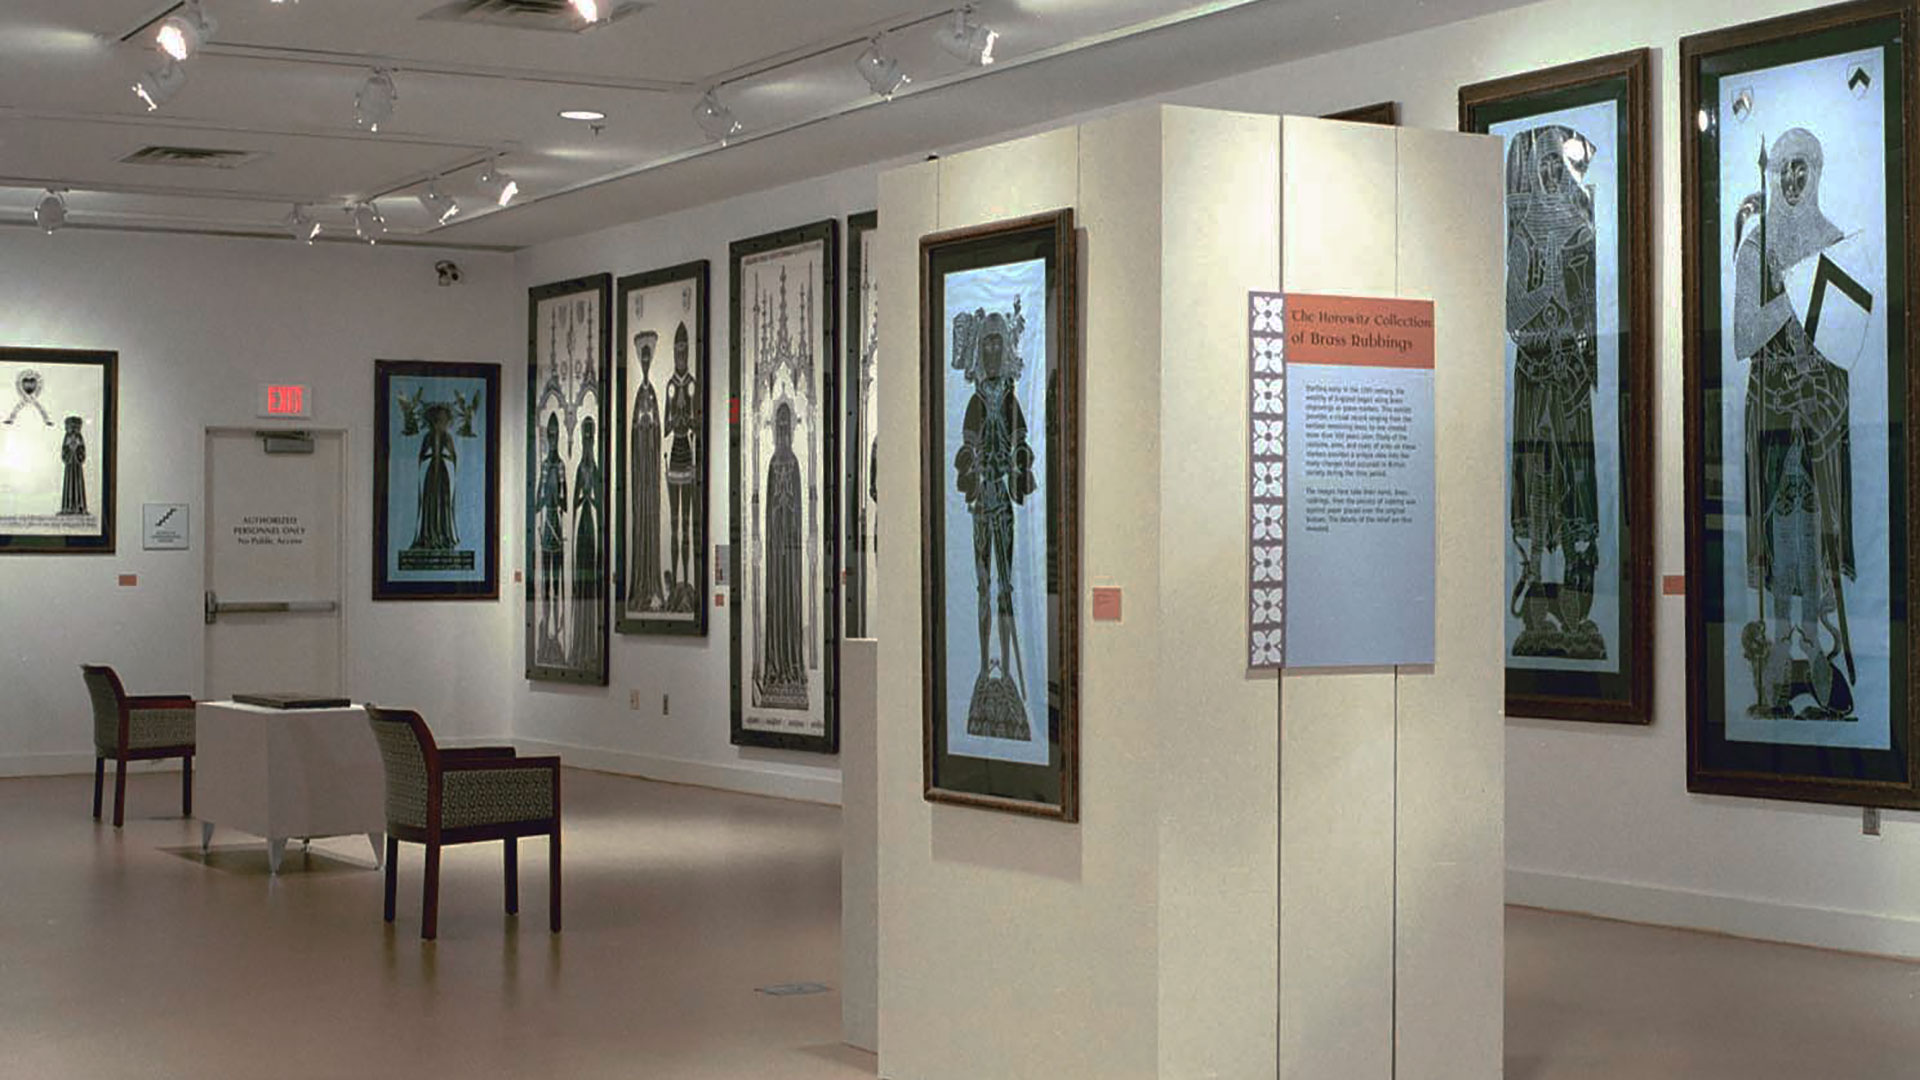 overview of The Horowitz Collection of Memorial Brass Rubbings exhibit